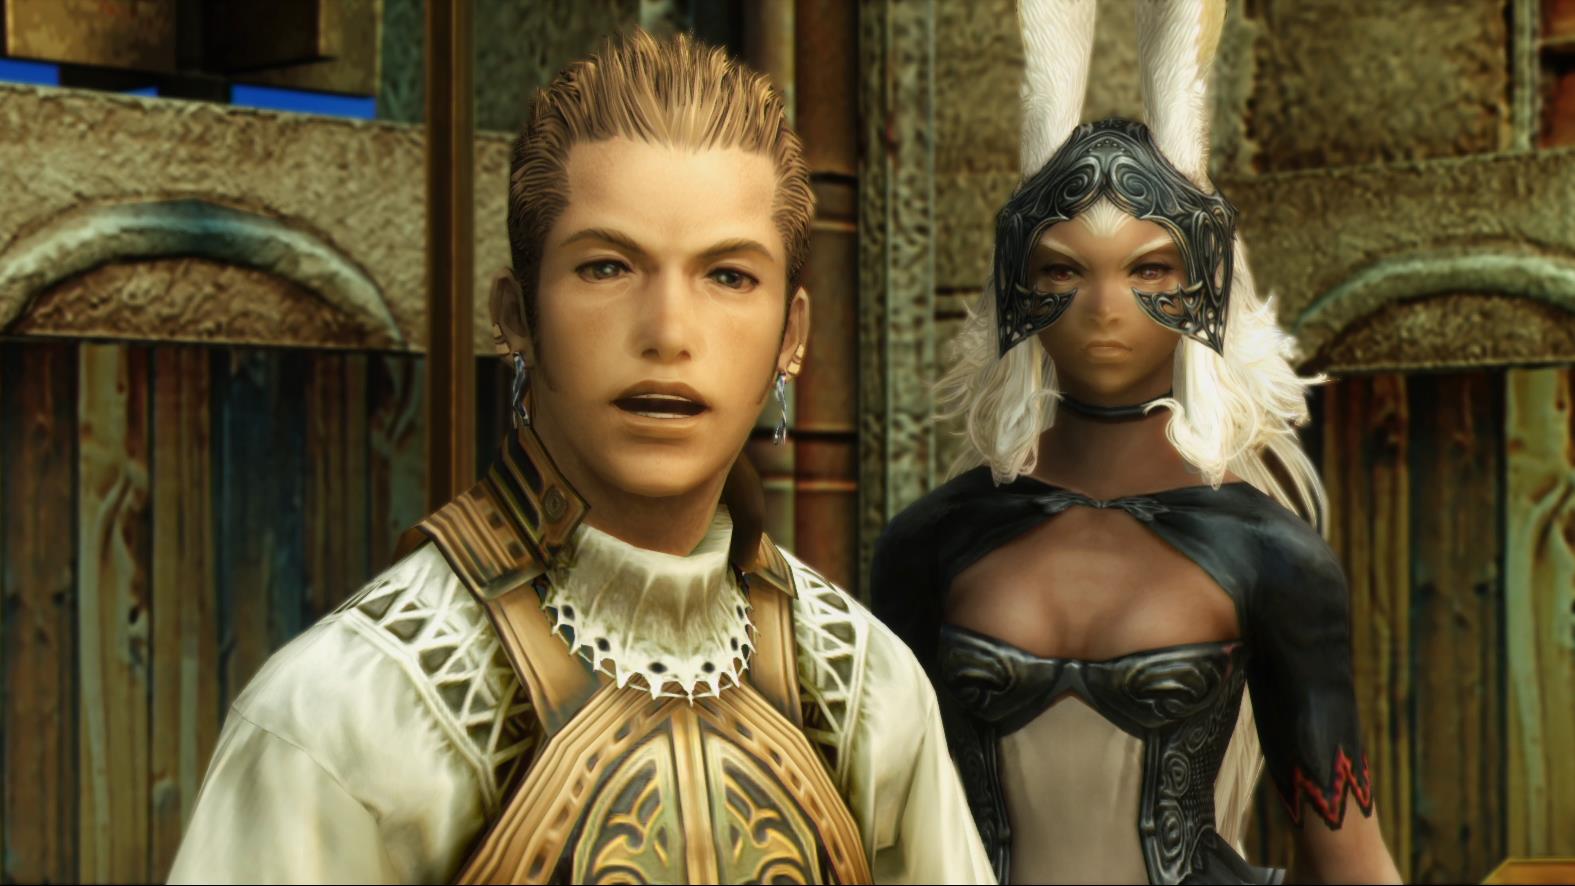 Final Fantasy XII: The Zodiac Age Switch Review